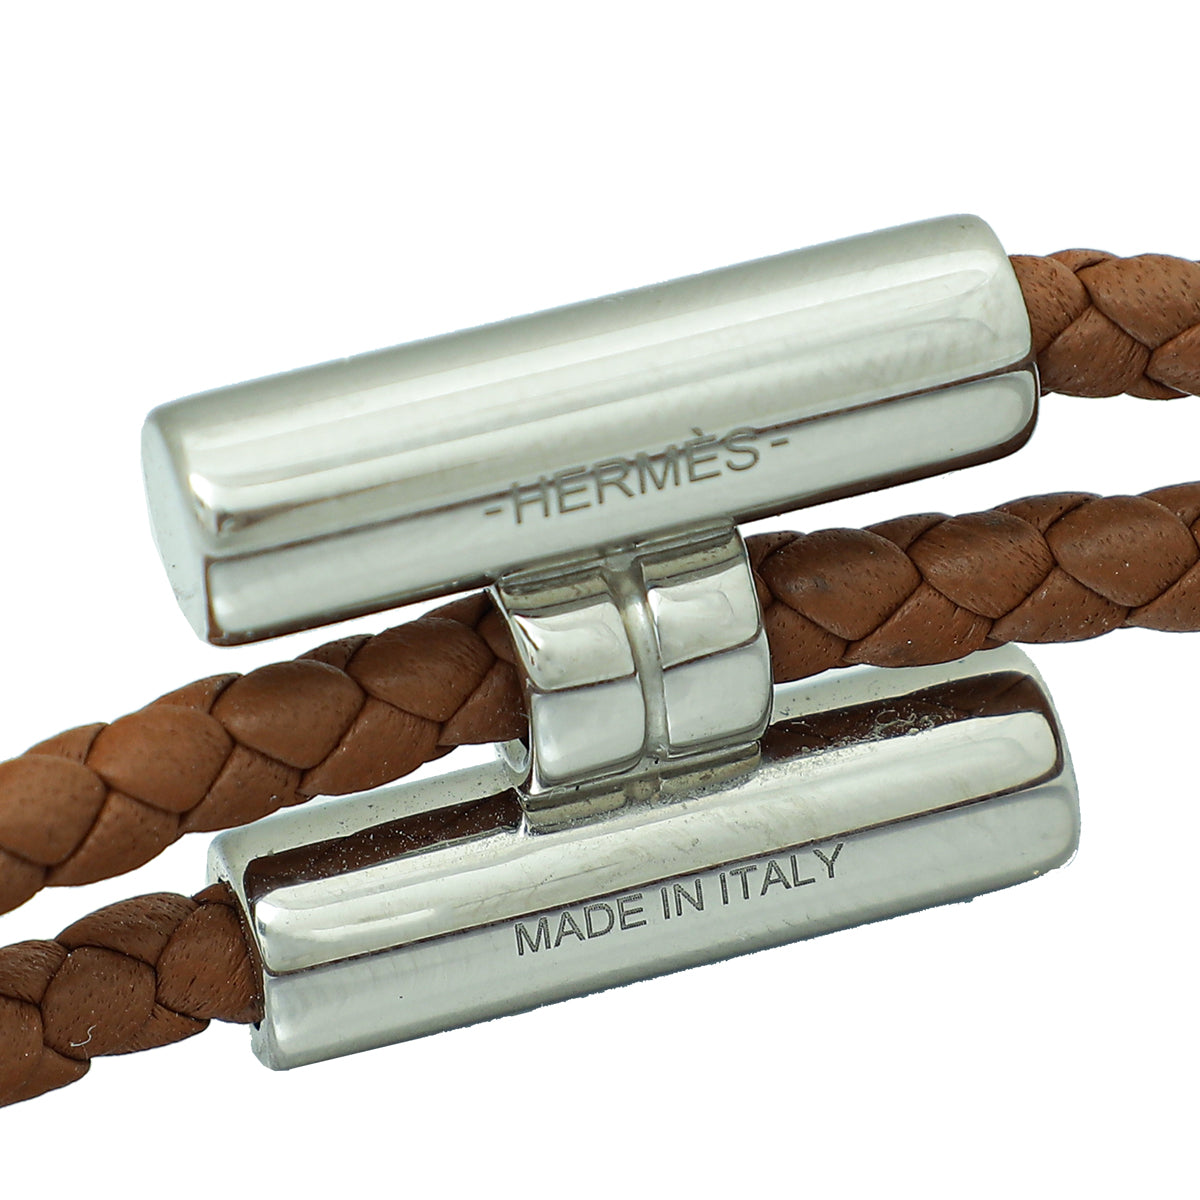 Hermes Bracelets for sale in Oran Algeria  Facebook Marketplace  Facebook